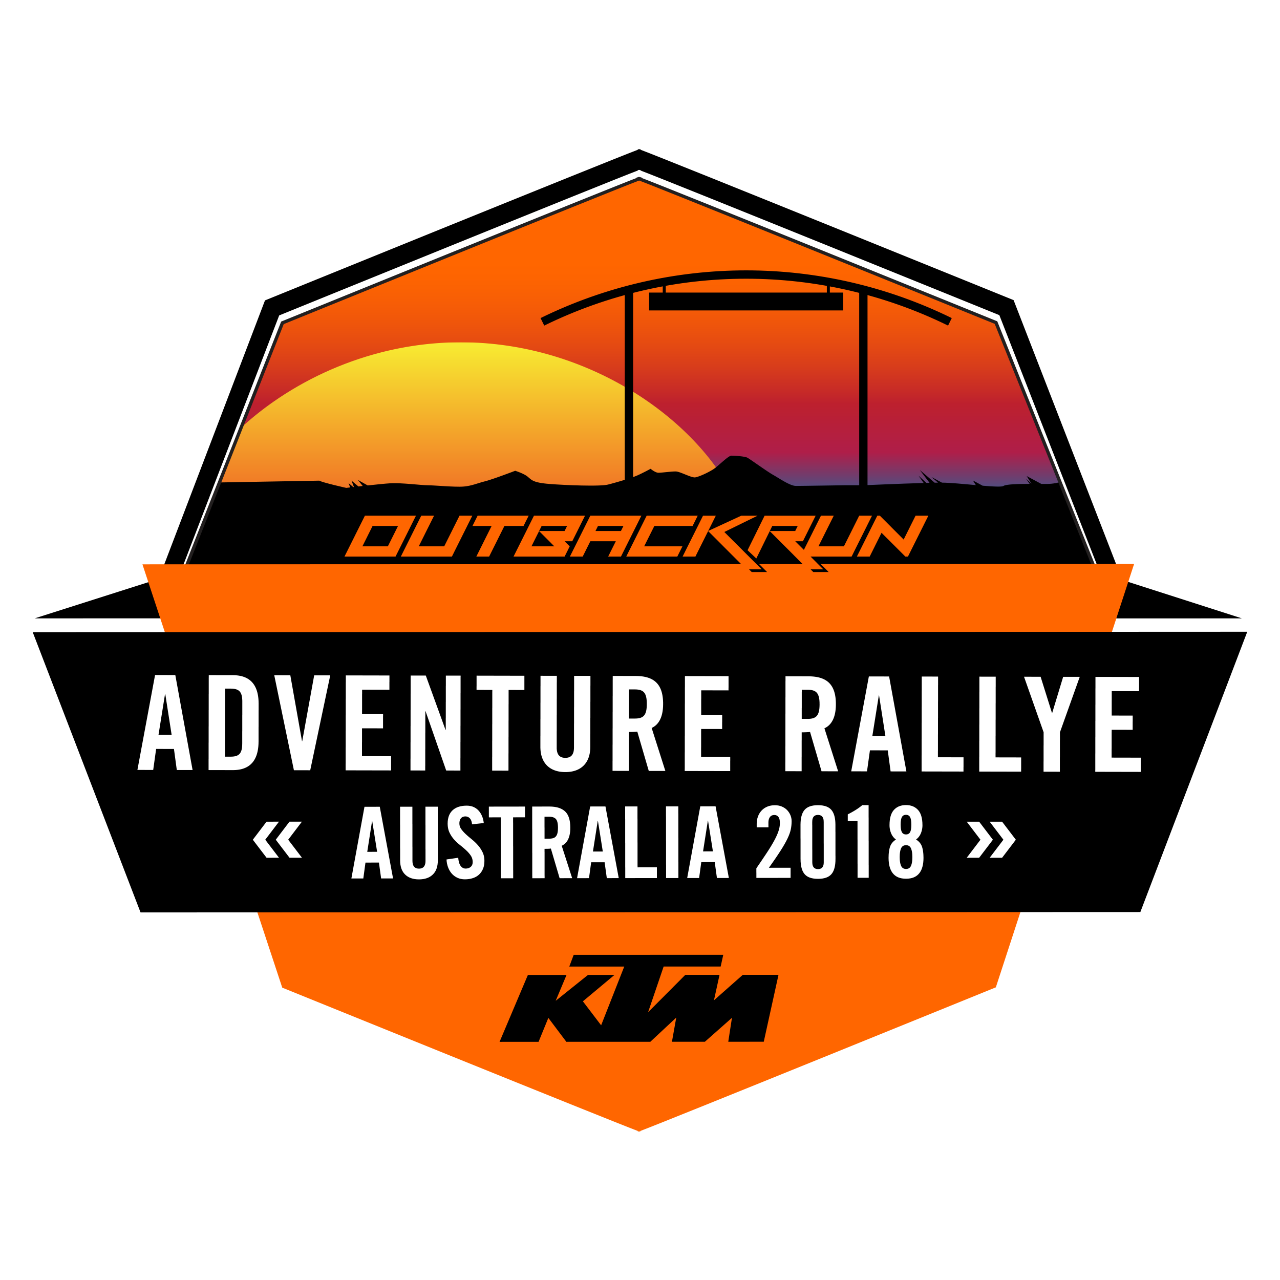 2018 KTM Australia Adventure Rallye: Outback Run